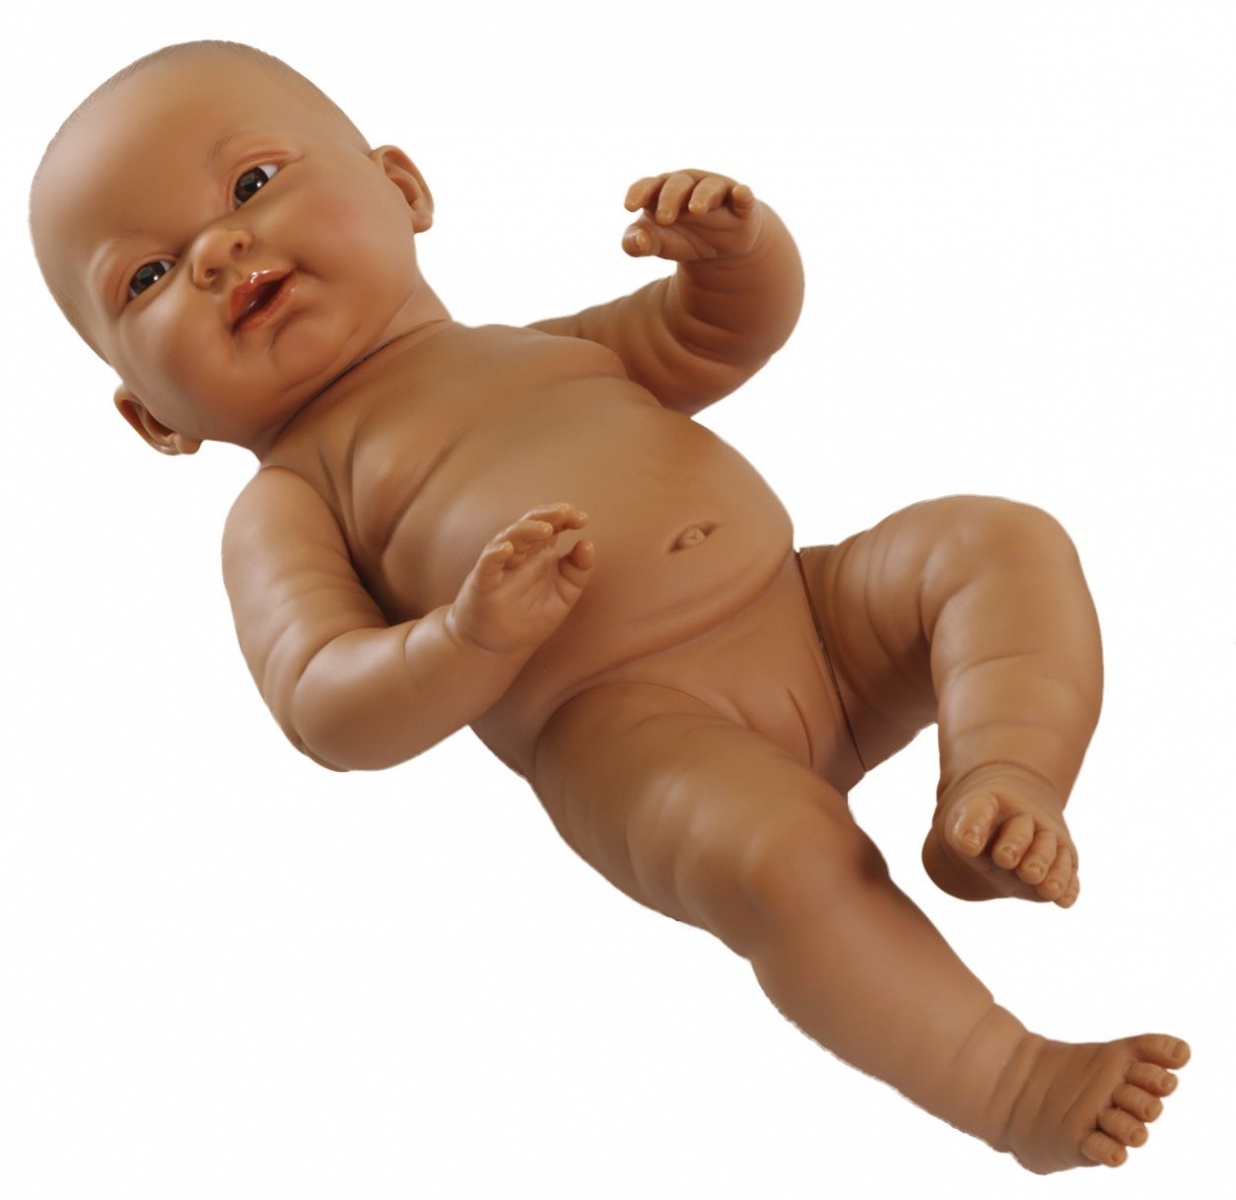 Файл:Anatomically-correct-baby-doll.jpg - Куклопедия